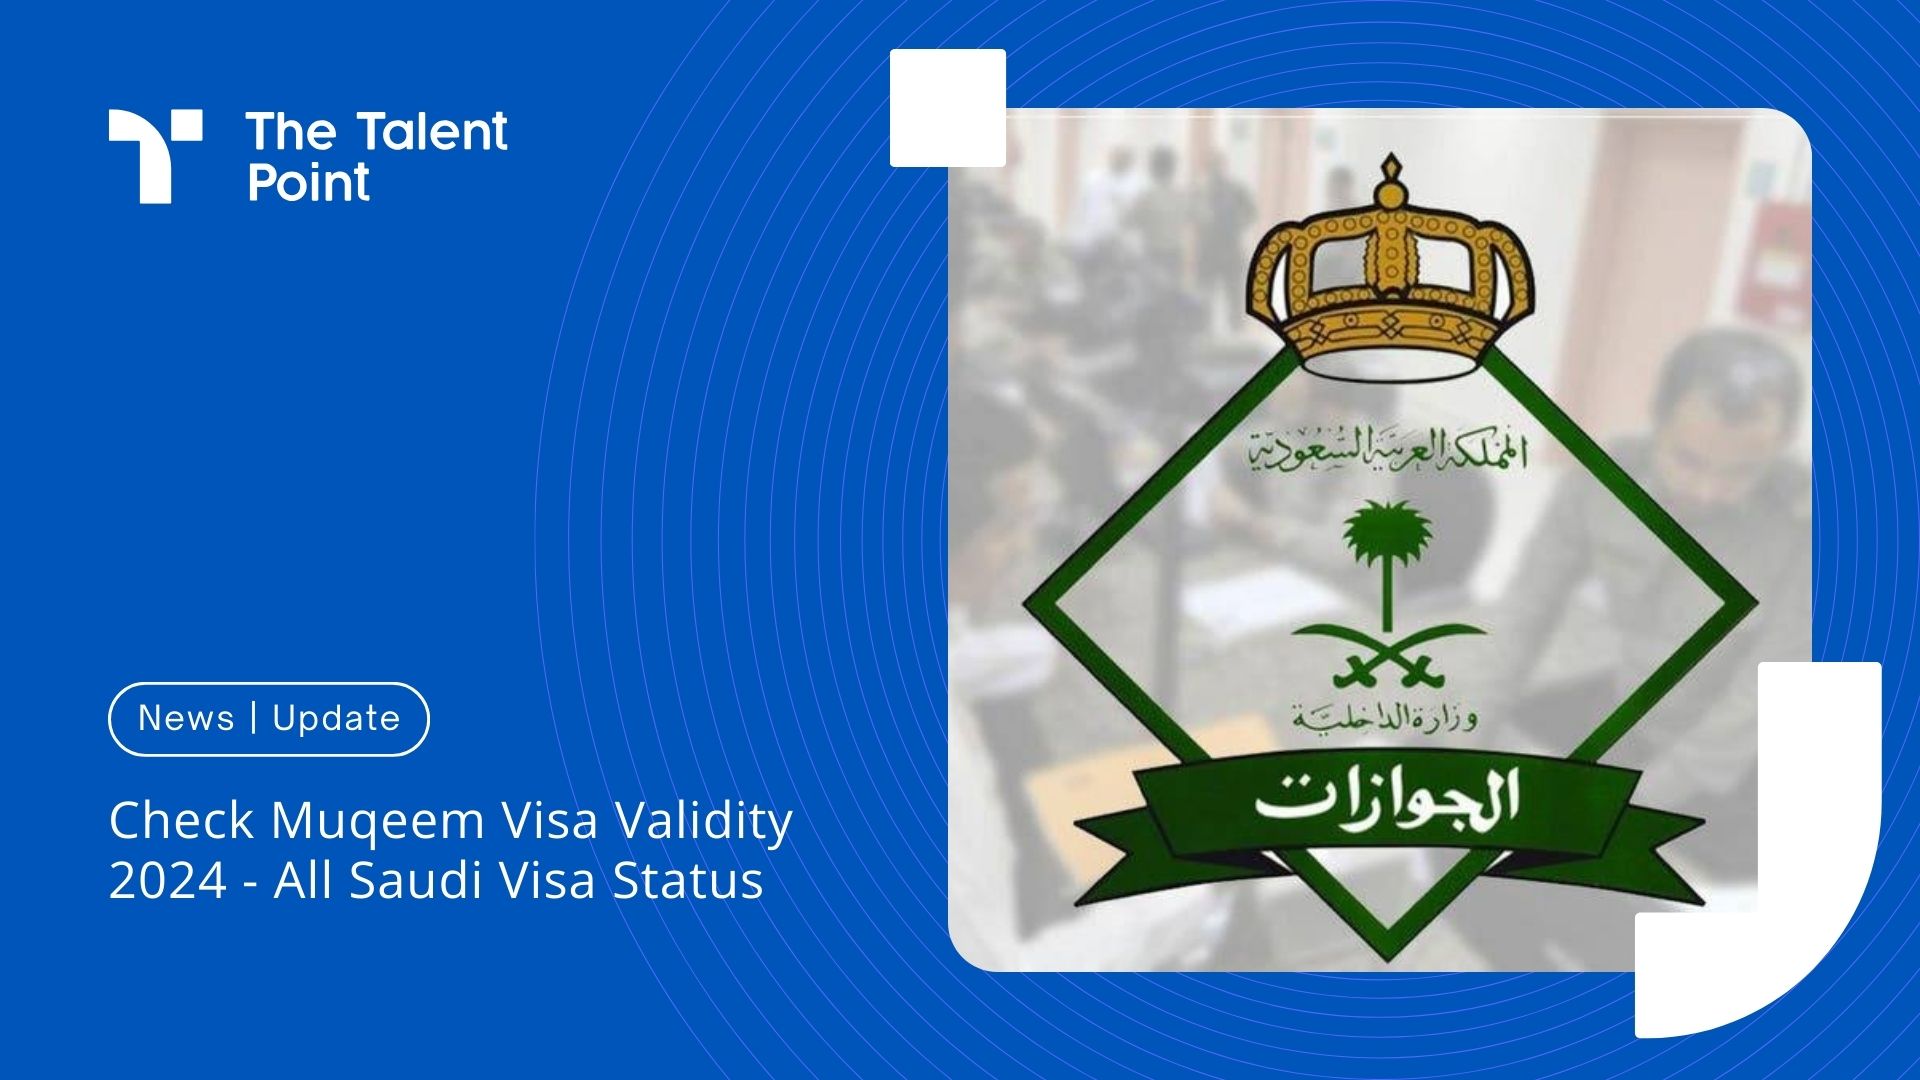 Check Muqeem Visa Validity 2024 - All Saudi Visa Status - TalentPoint